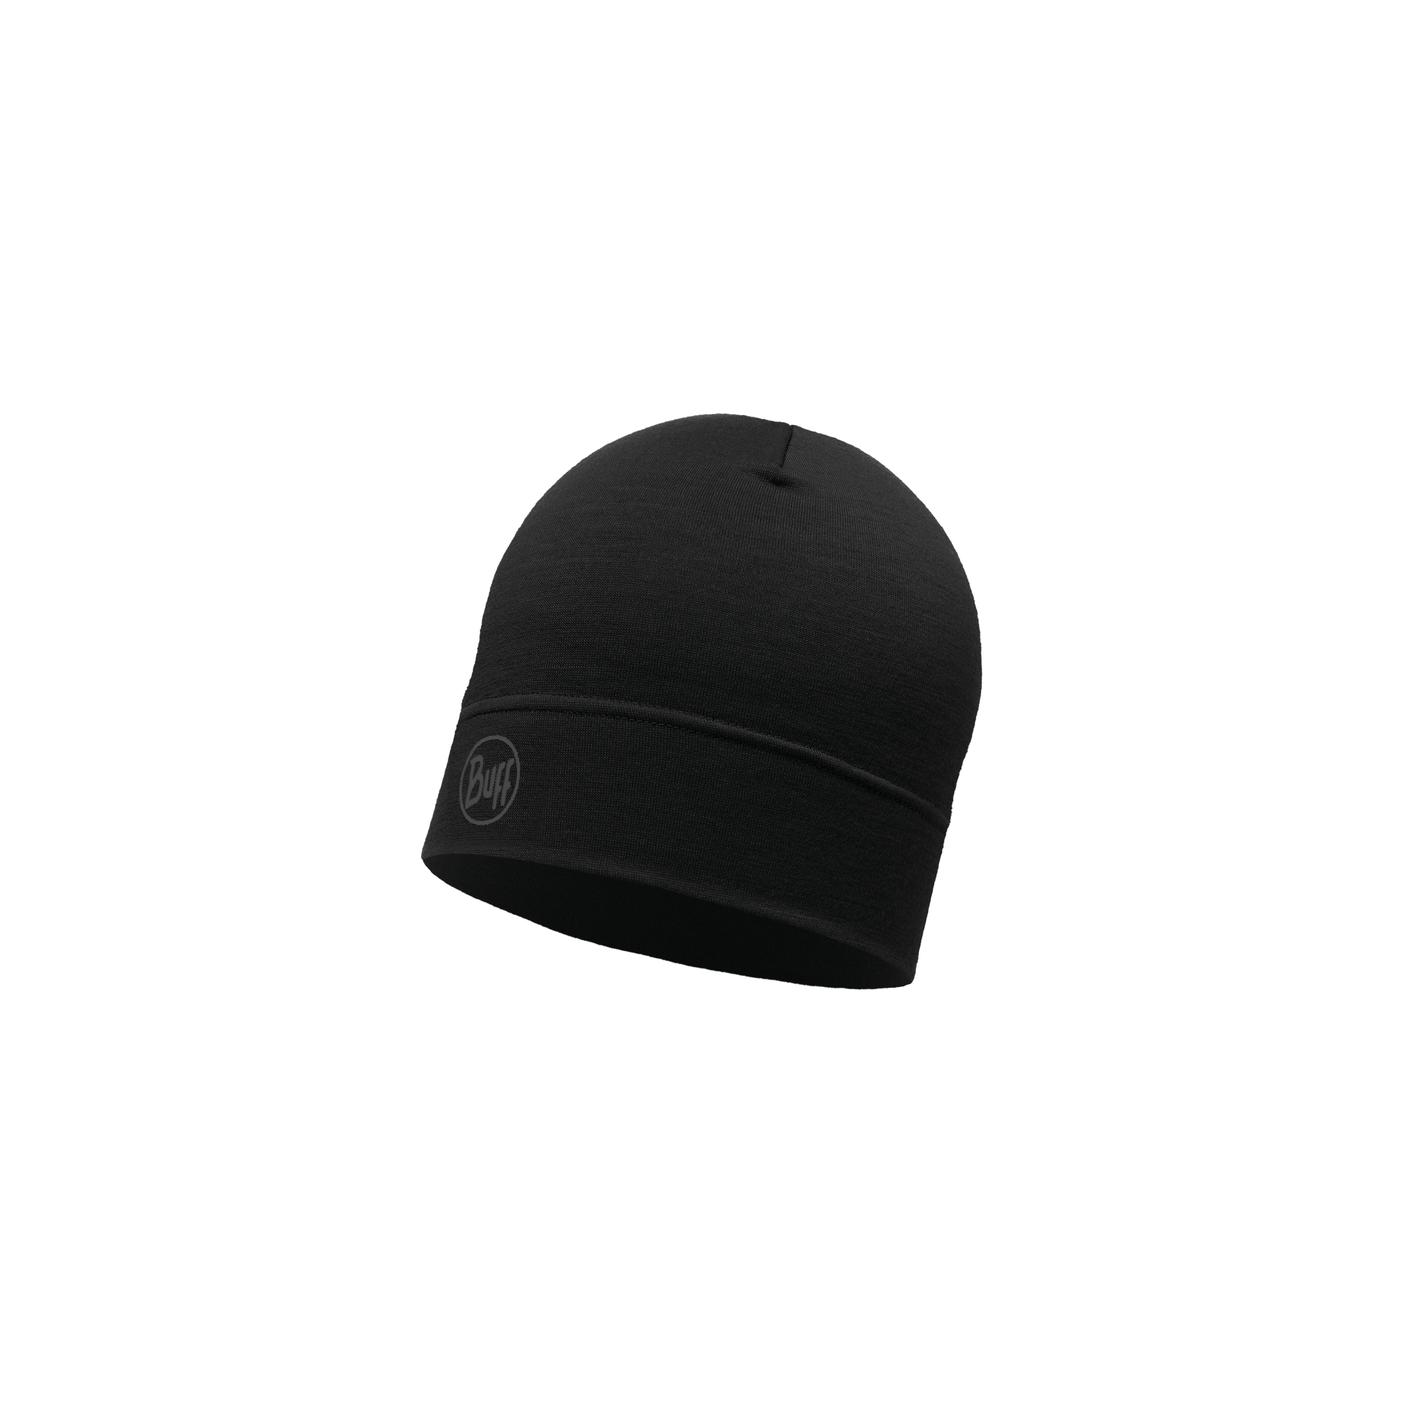 BUFF Lightweight Merino Wool Hat Noir 